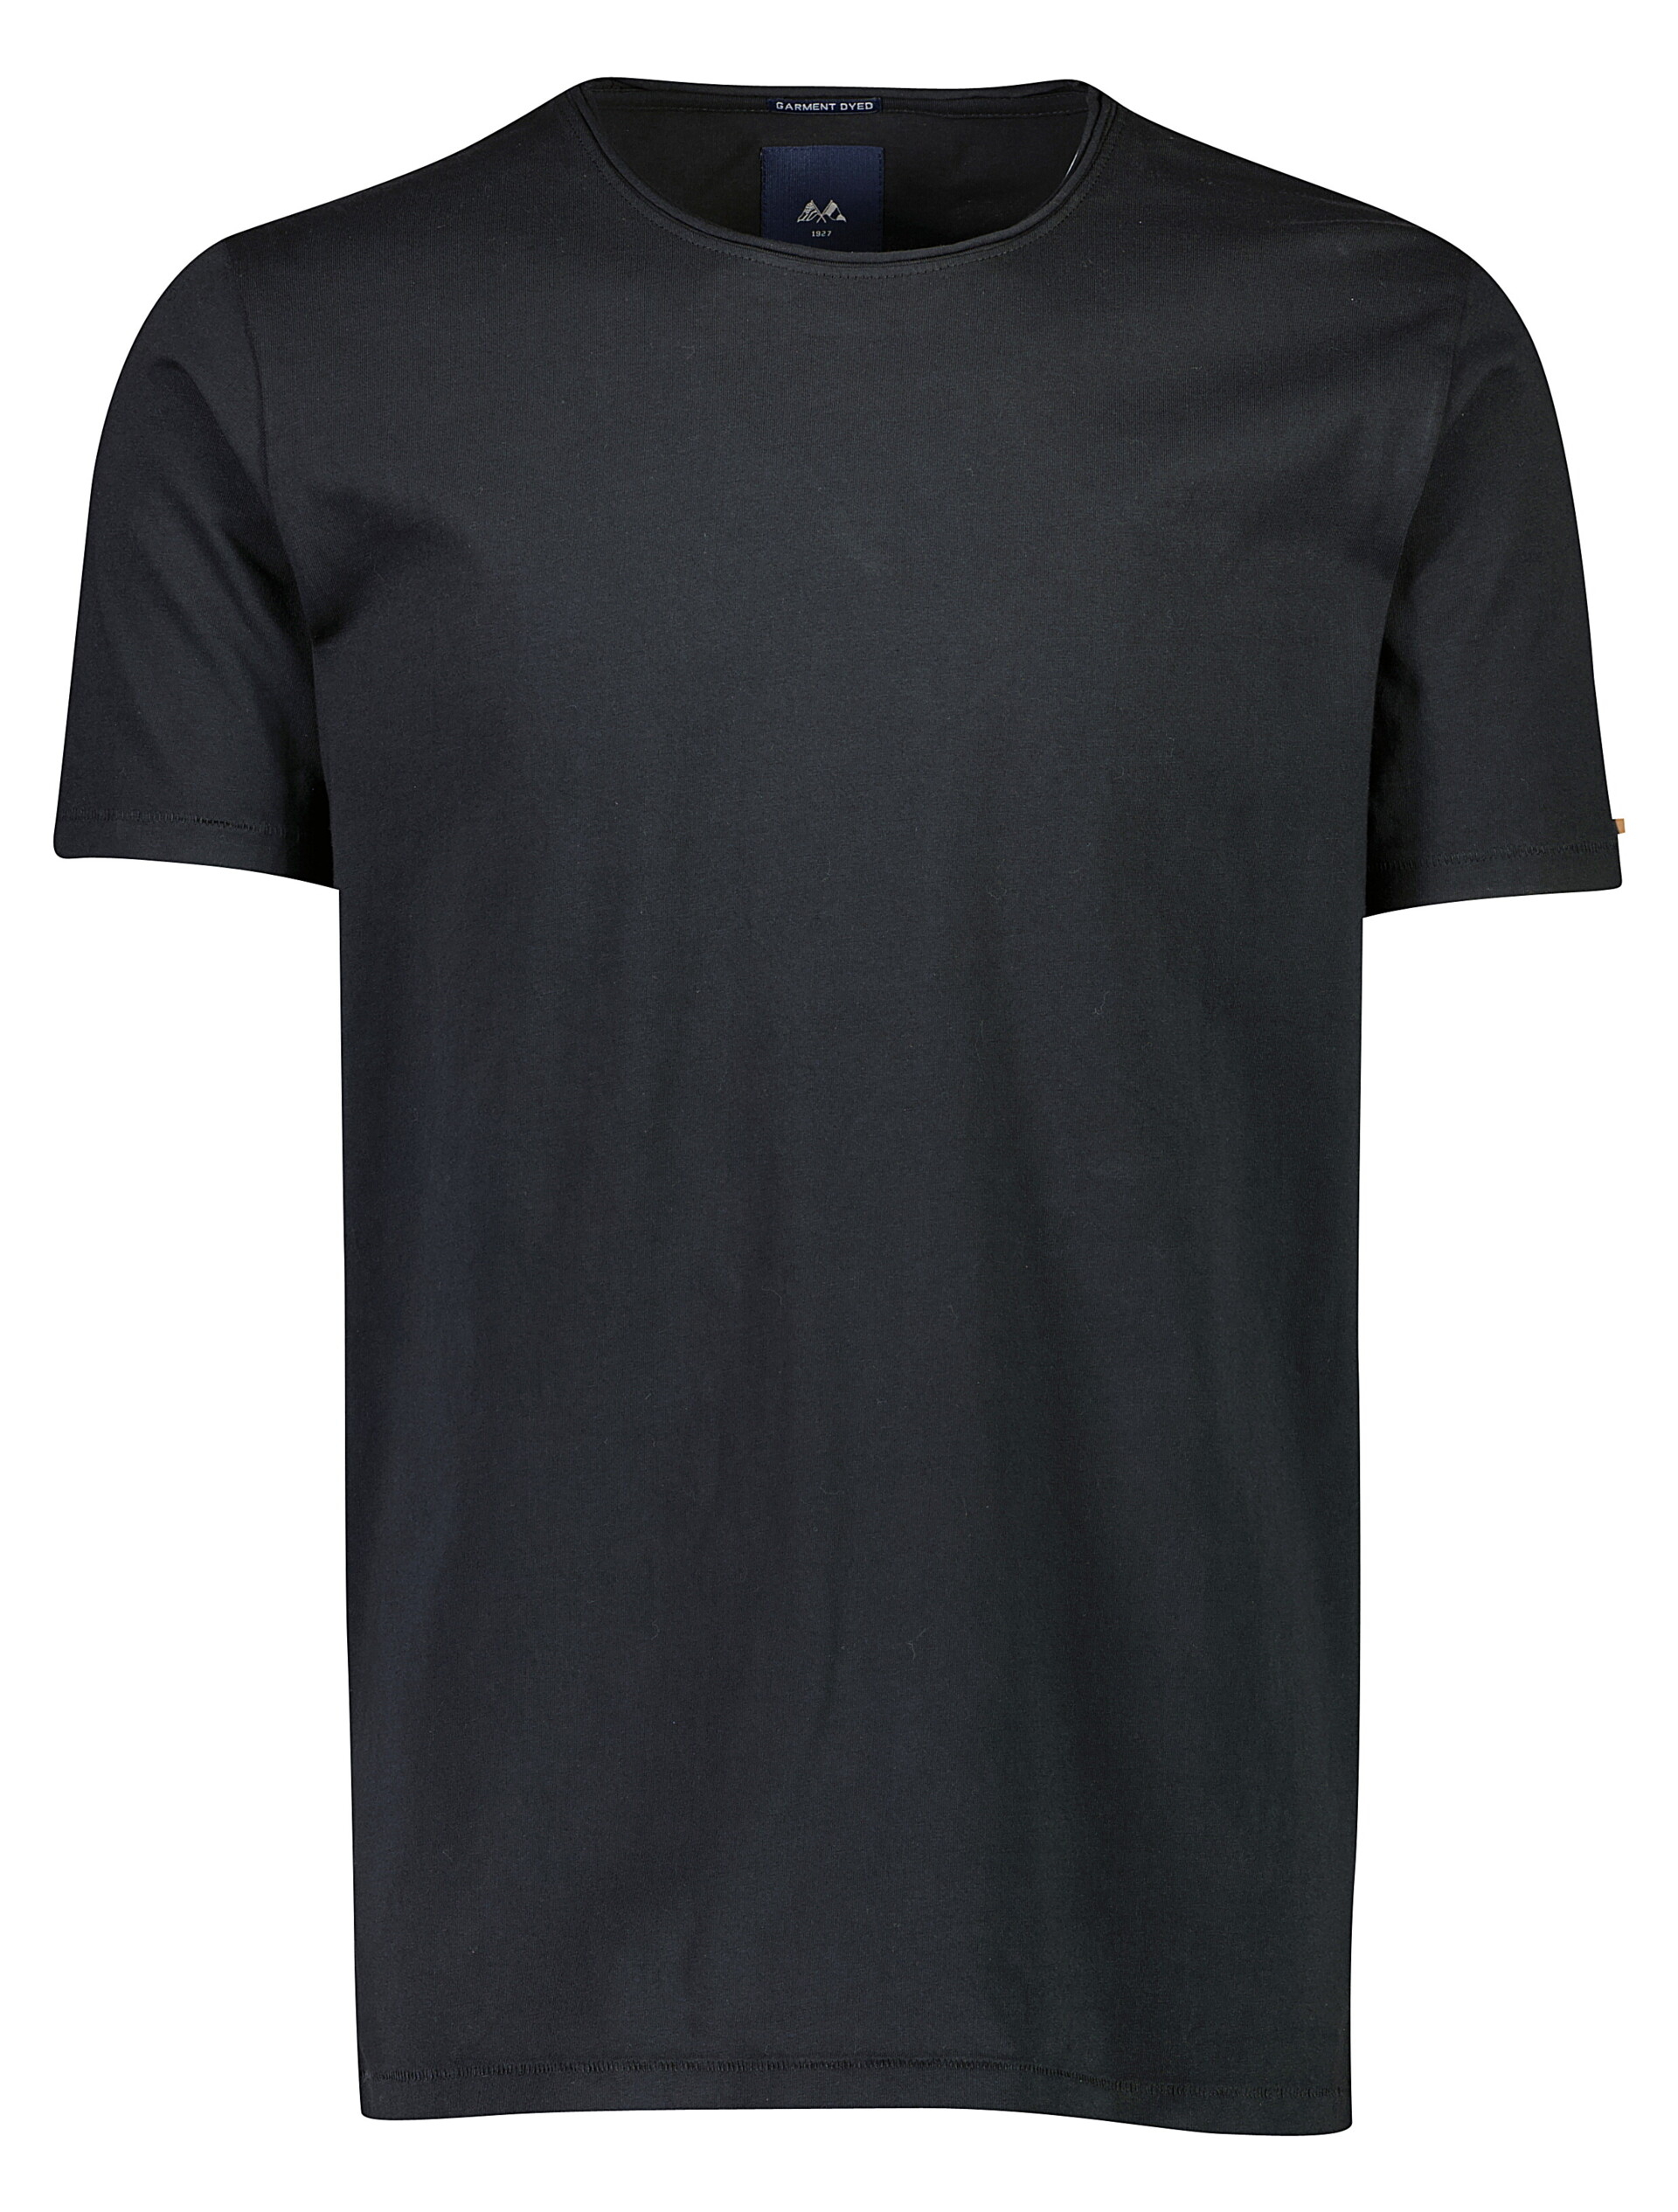 Lindbergh T-shirt svart / dusty black